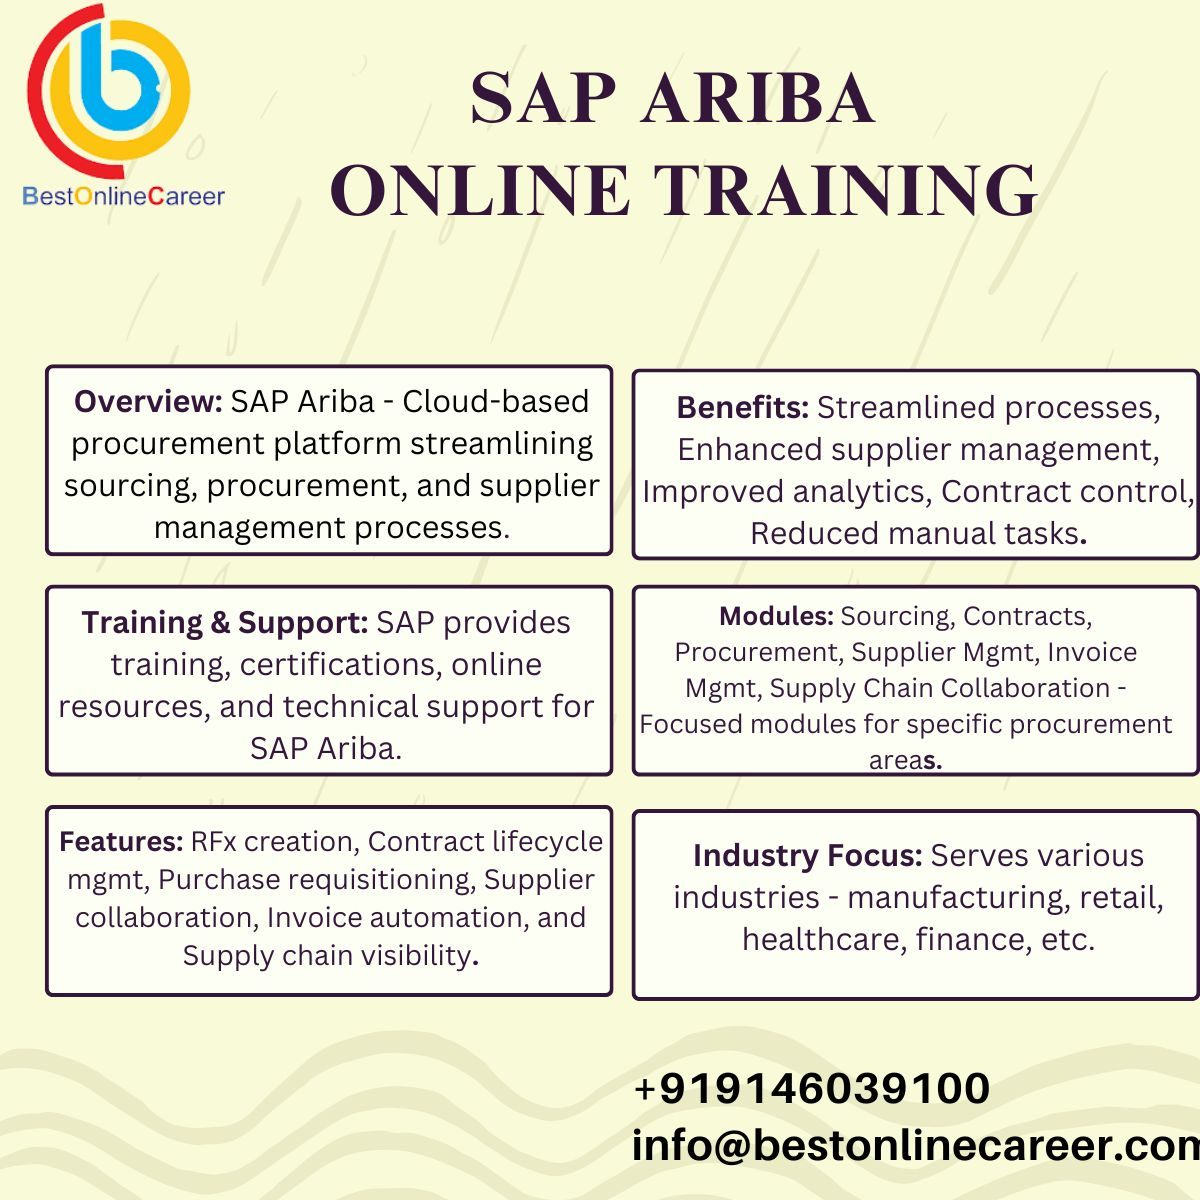 SAP ARIBA ONLINE TRAINING with Best Online Career